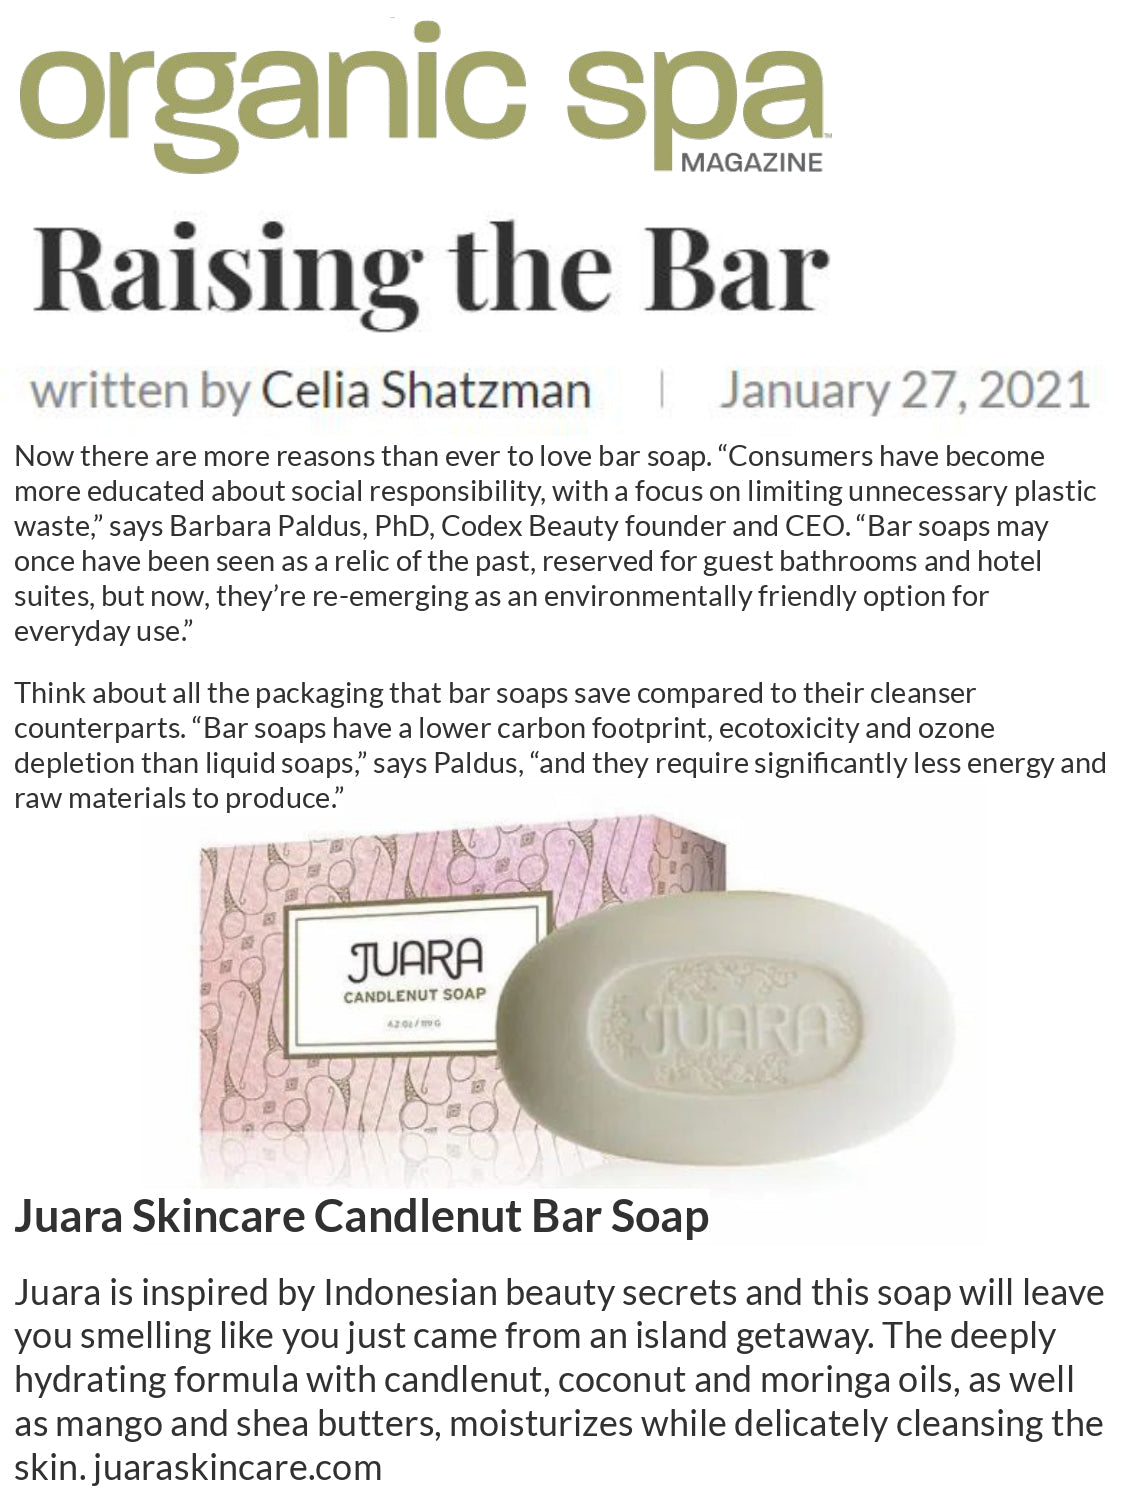 ORGANIC SPA MAGAZINE : Raising the Bar JUARA Skincare